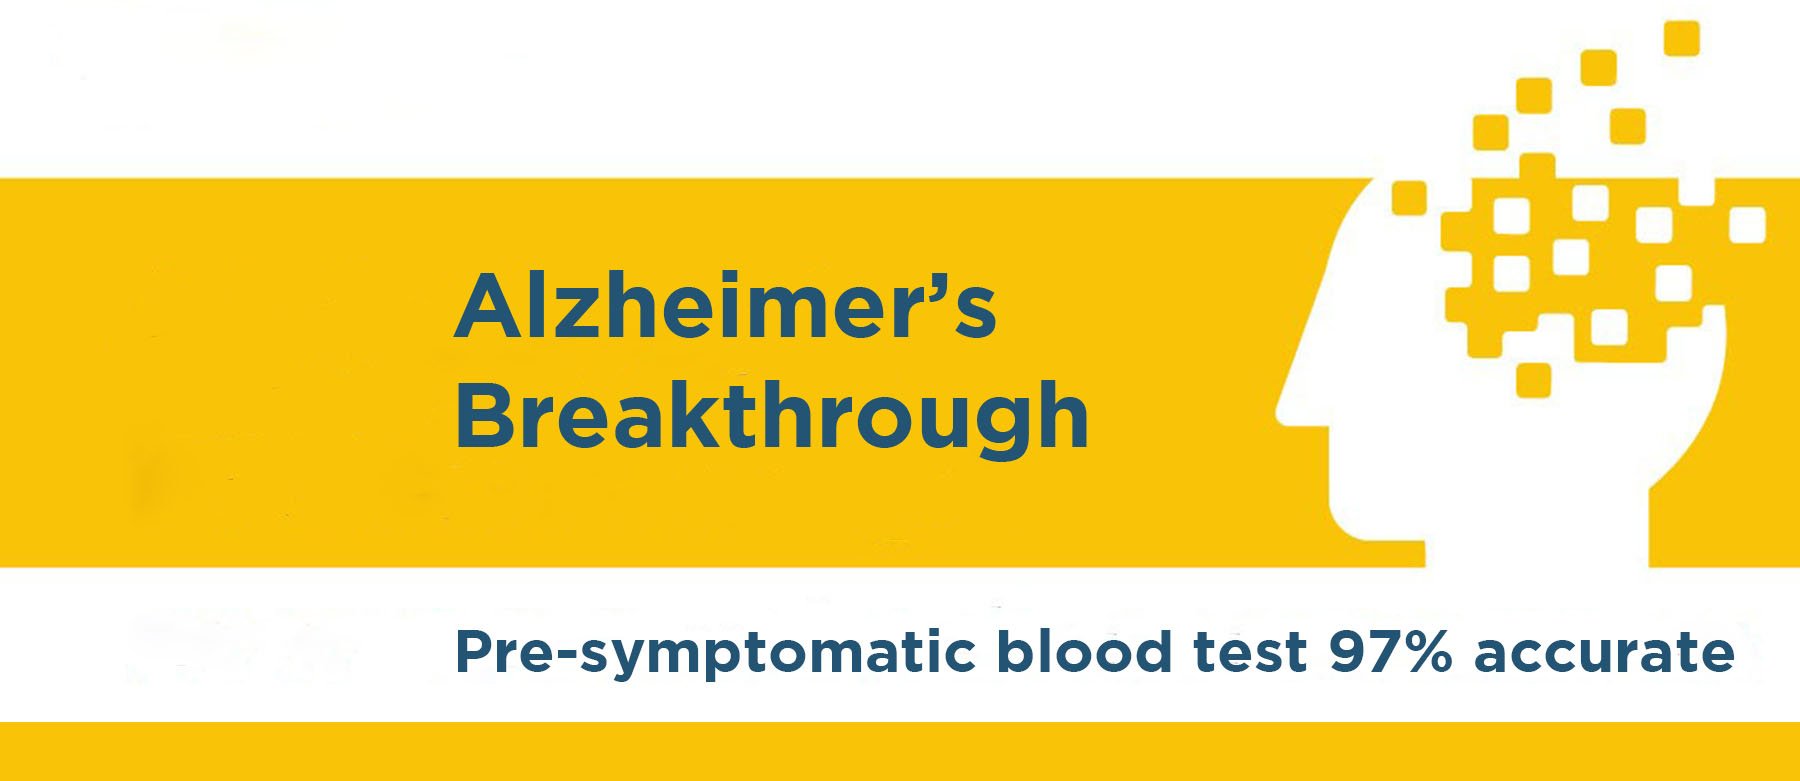 Alzheimer's Breakthrough - Pre-symptomatic blood test 97% accurate